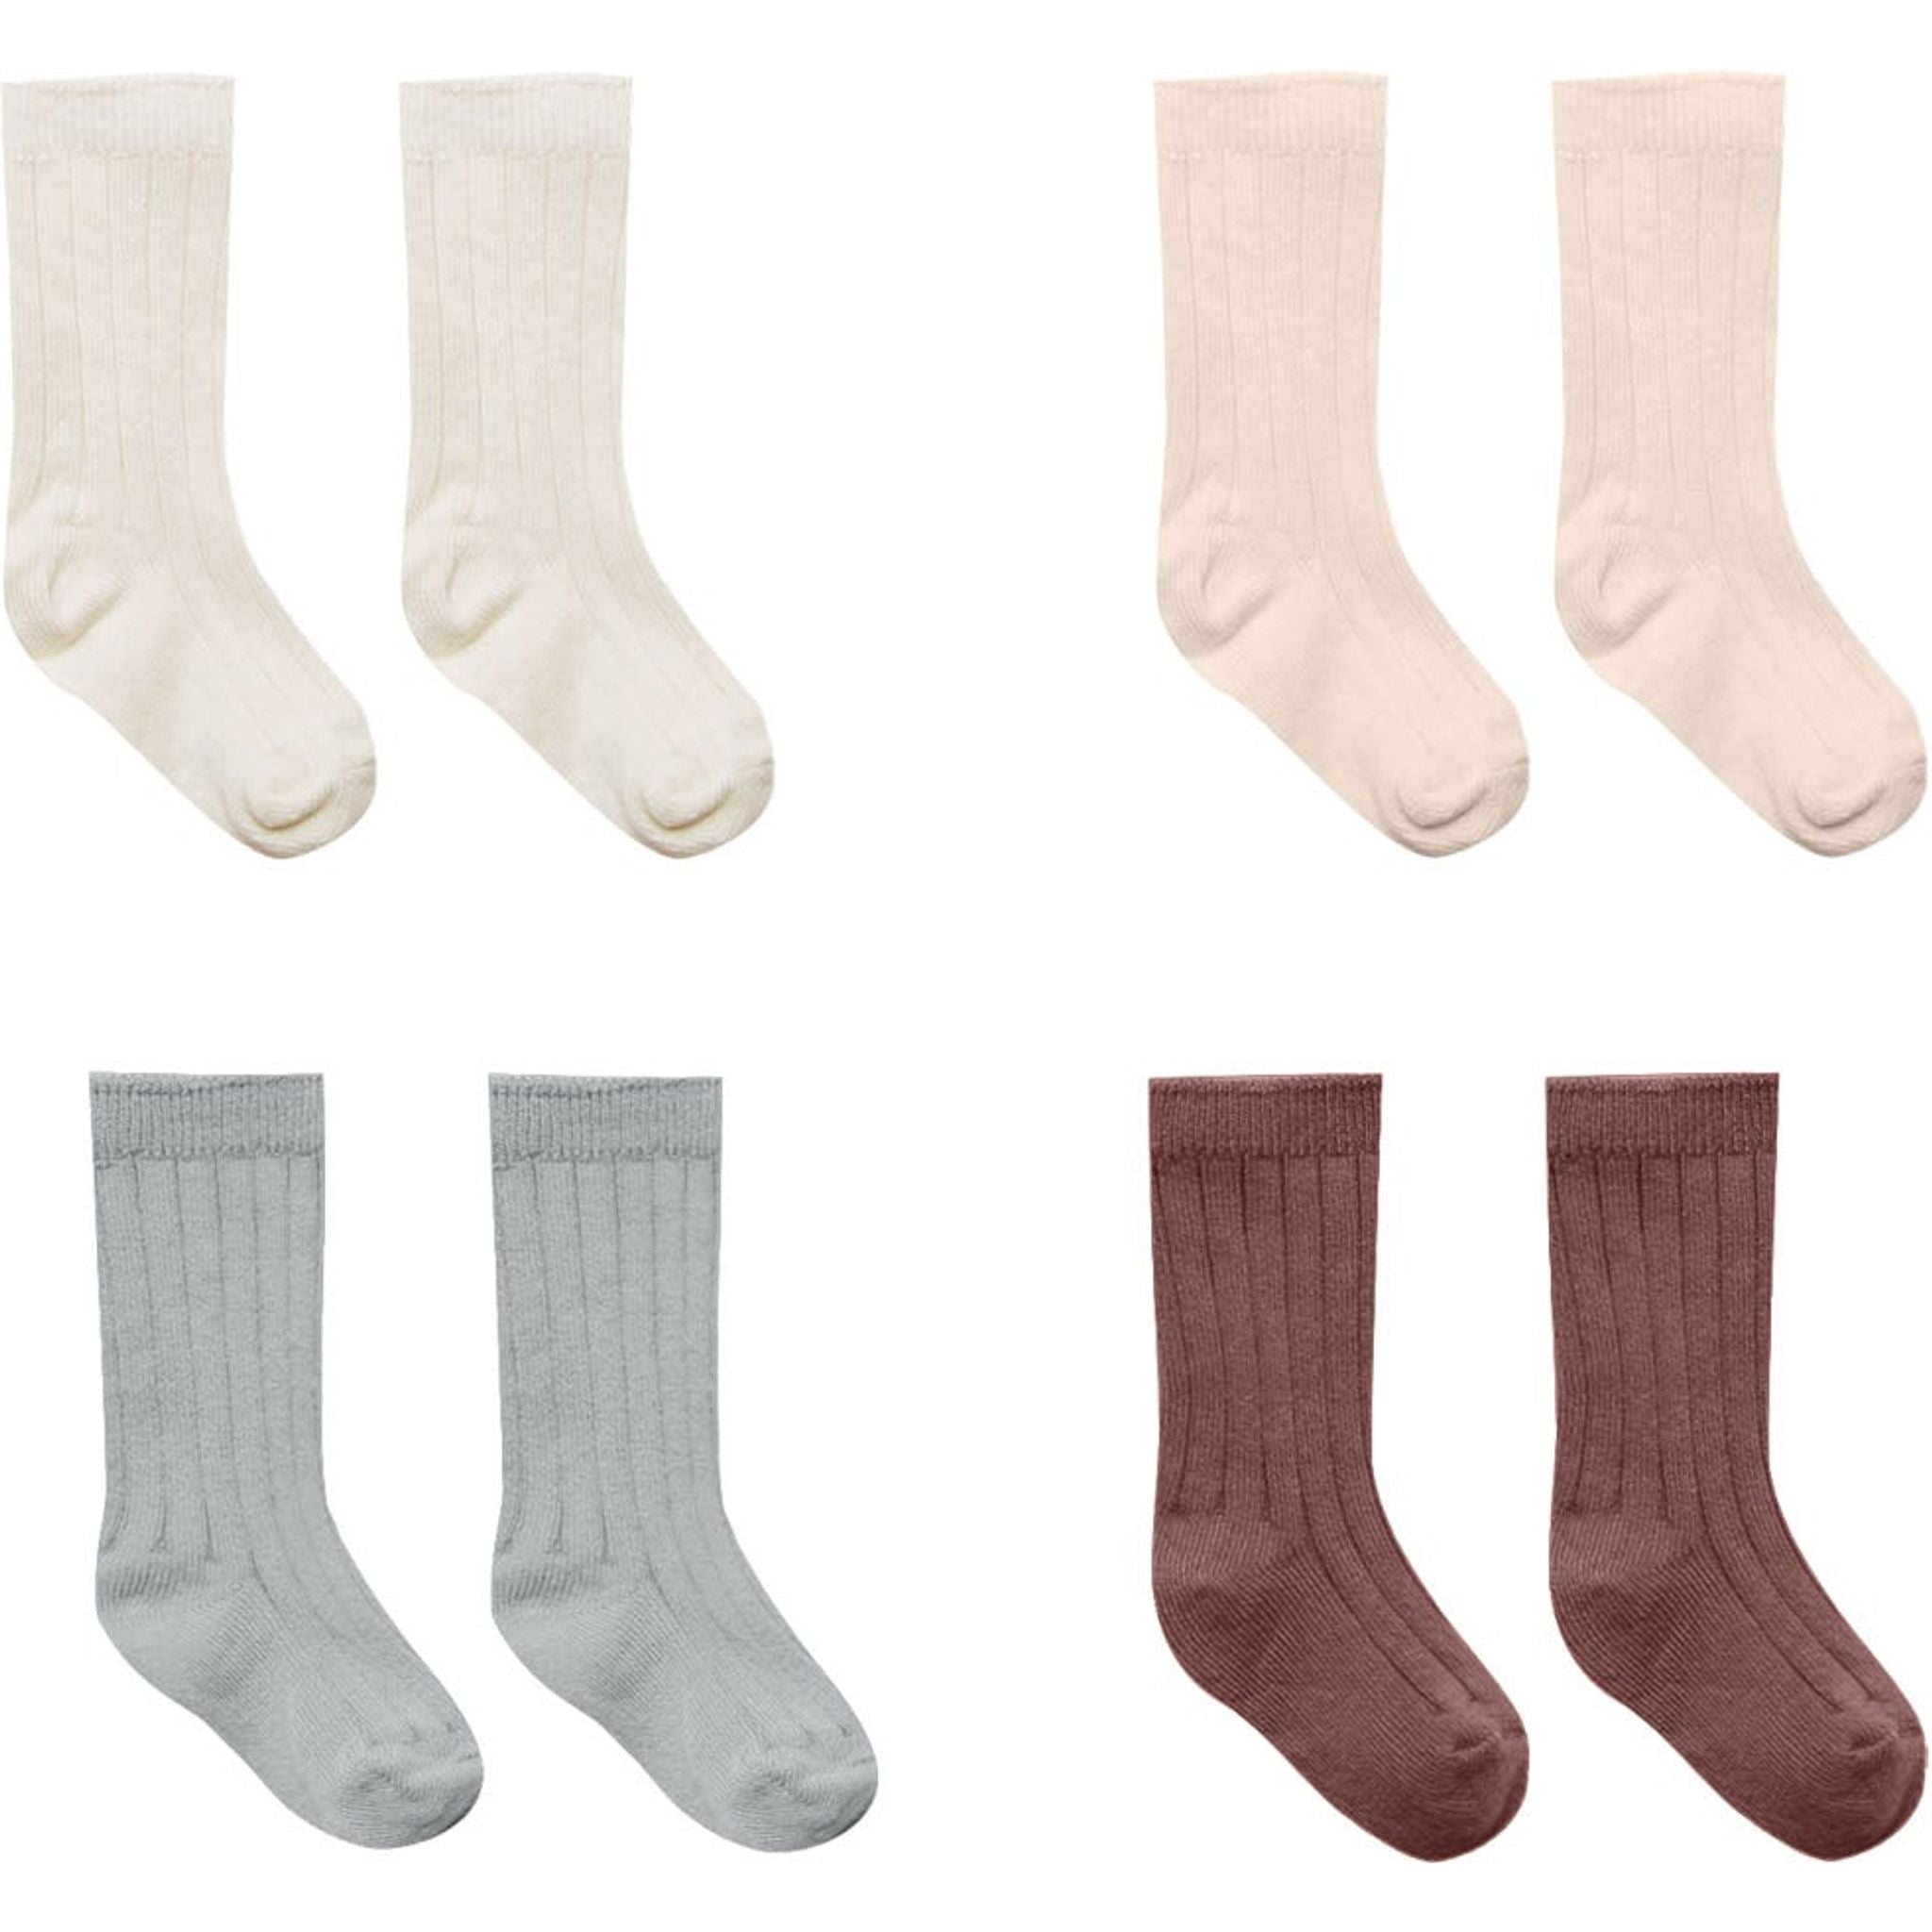 Socks - Ivory, Shell, Dusty Blue, Plum